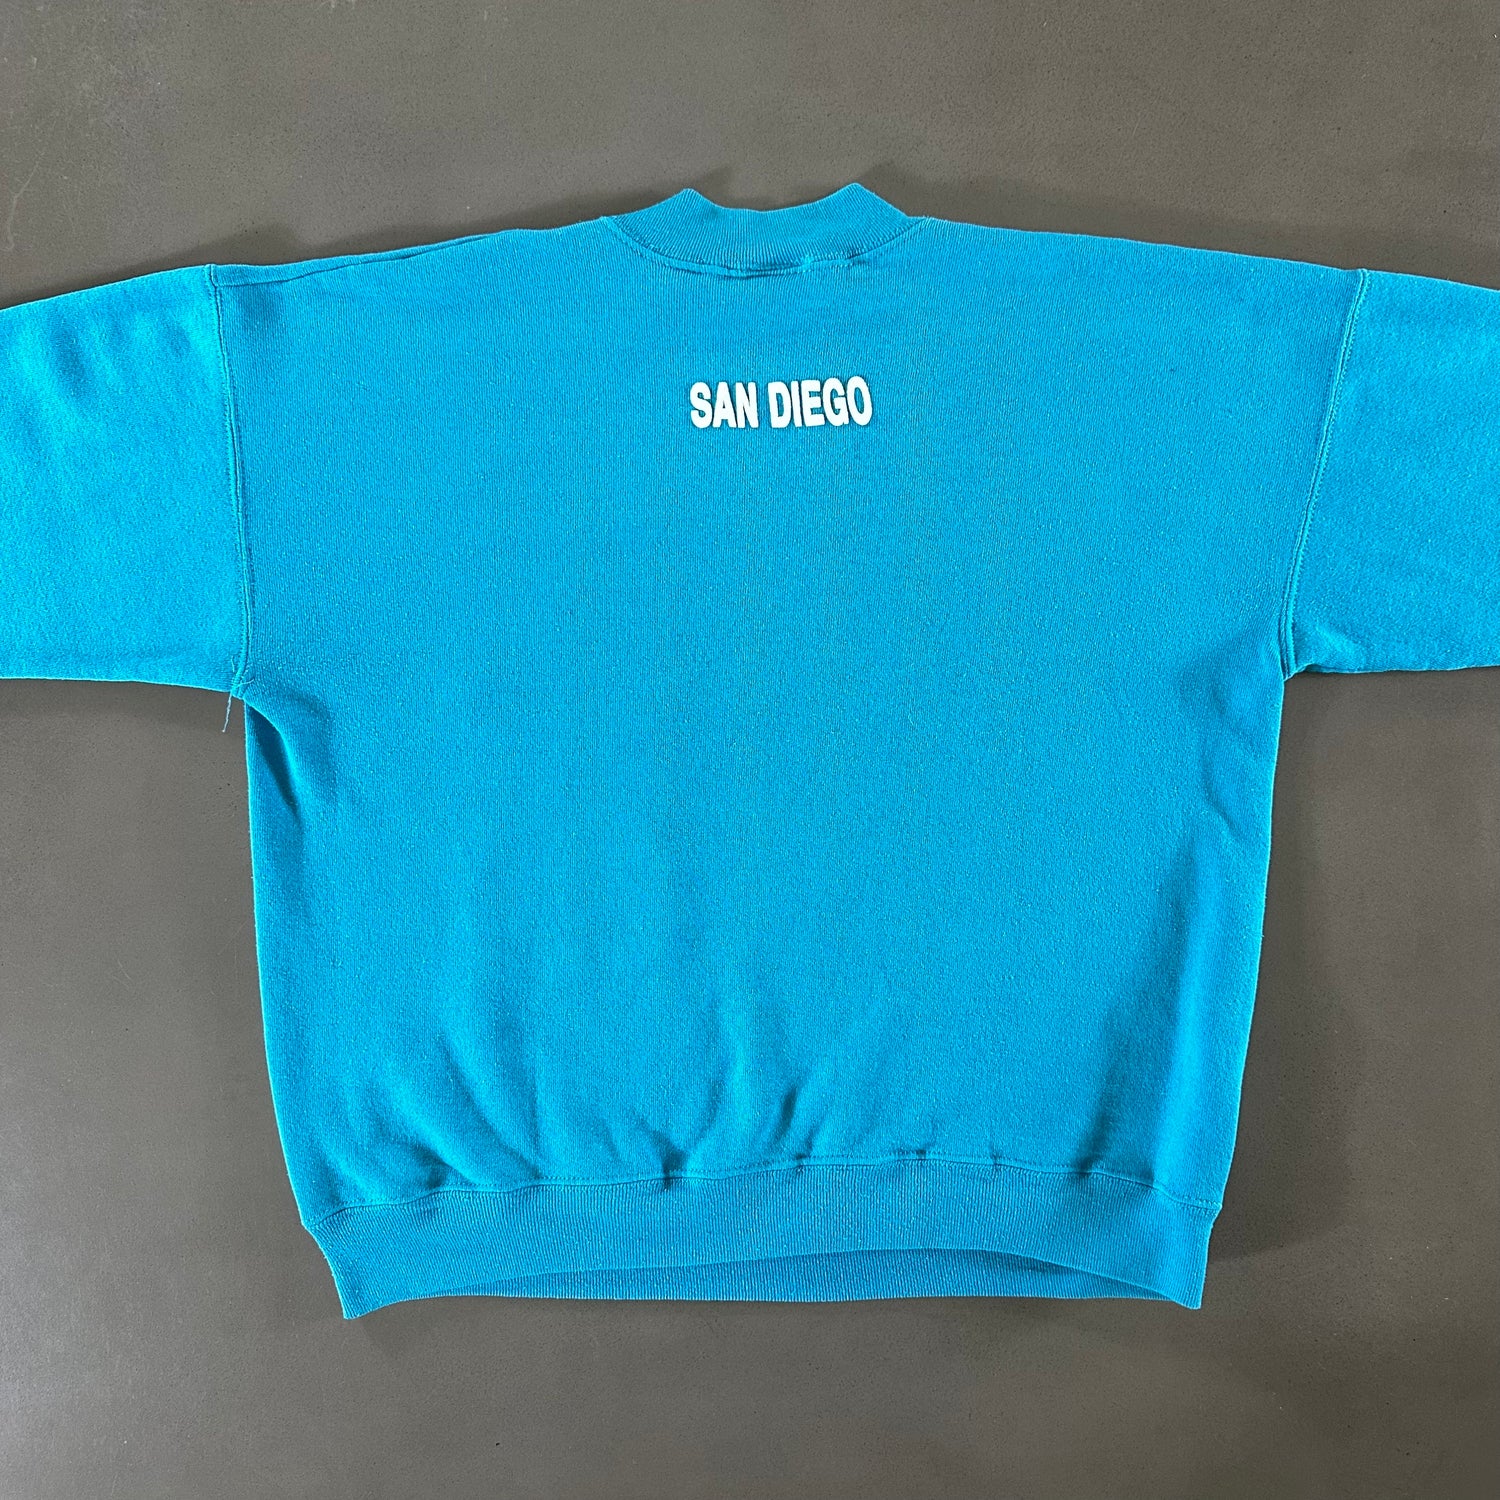 Vintage 1990s San Diego Sweatshirt size Large